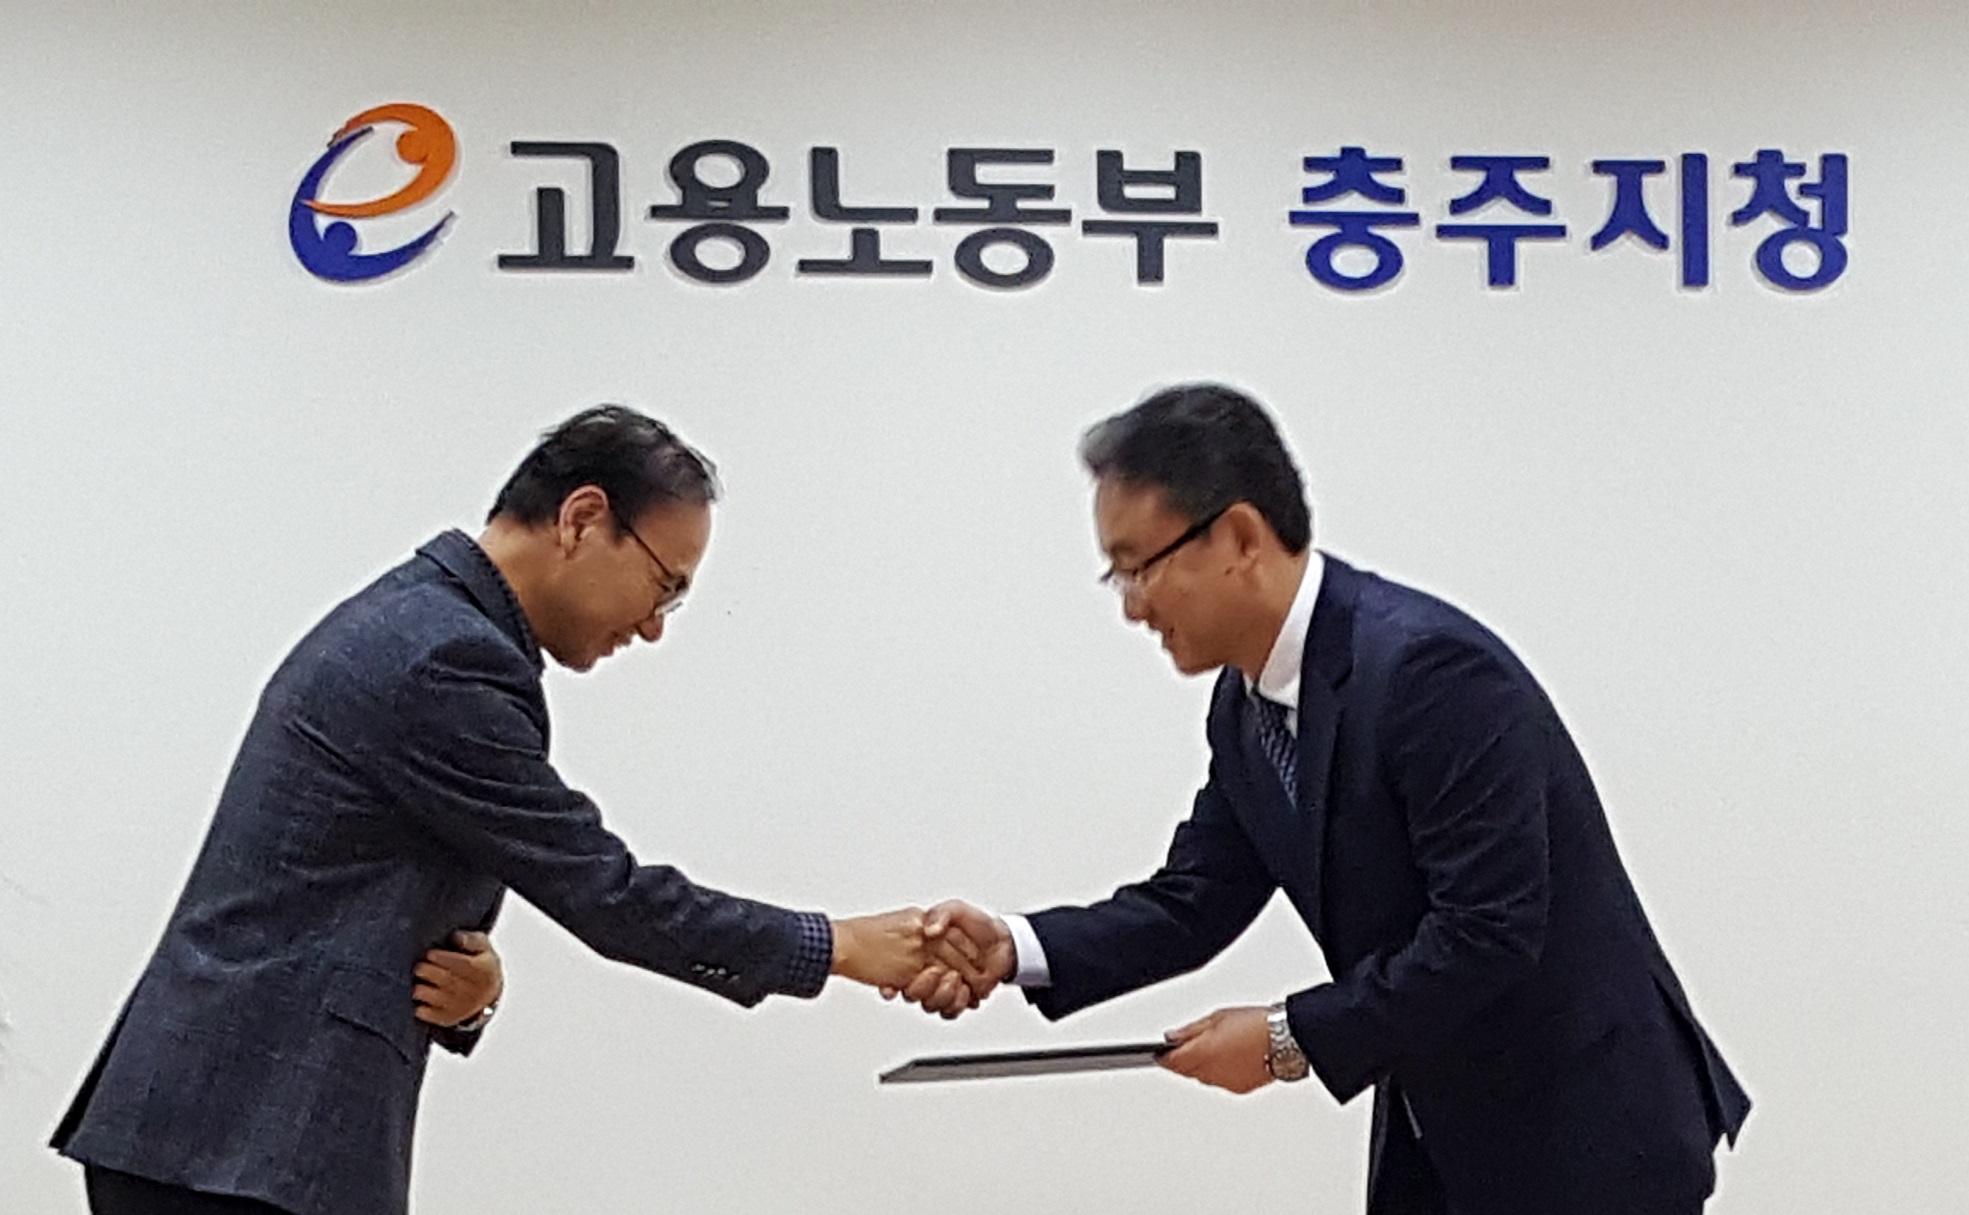 South Korea Minister of Employment Award